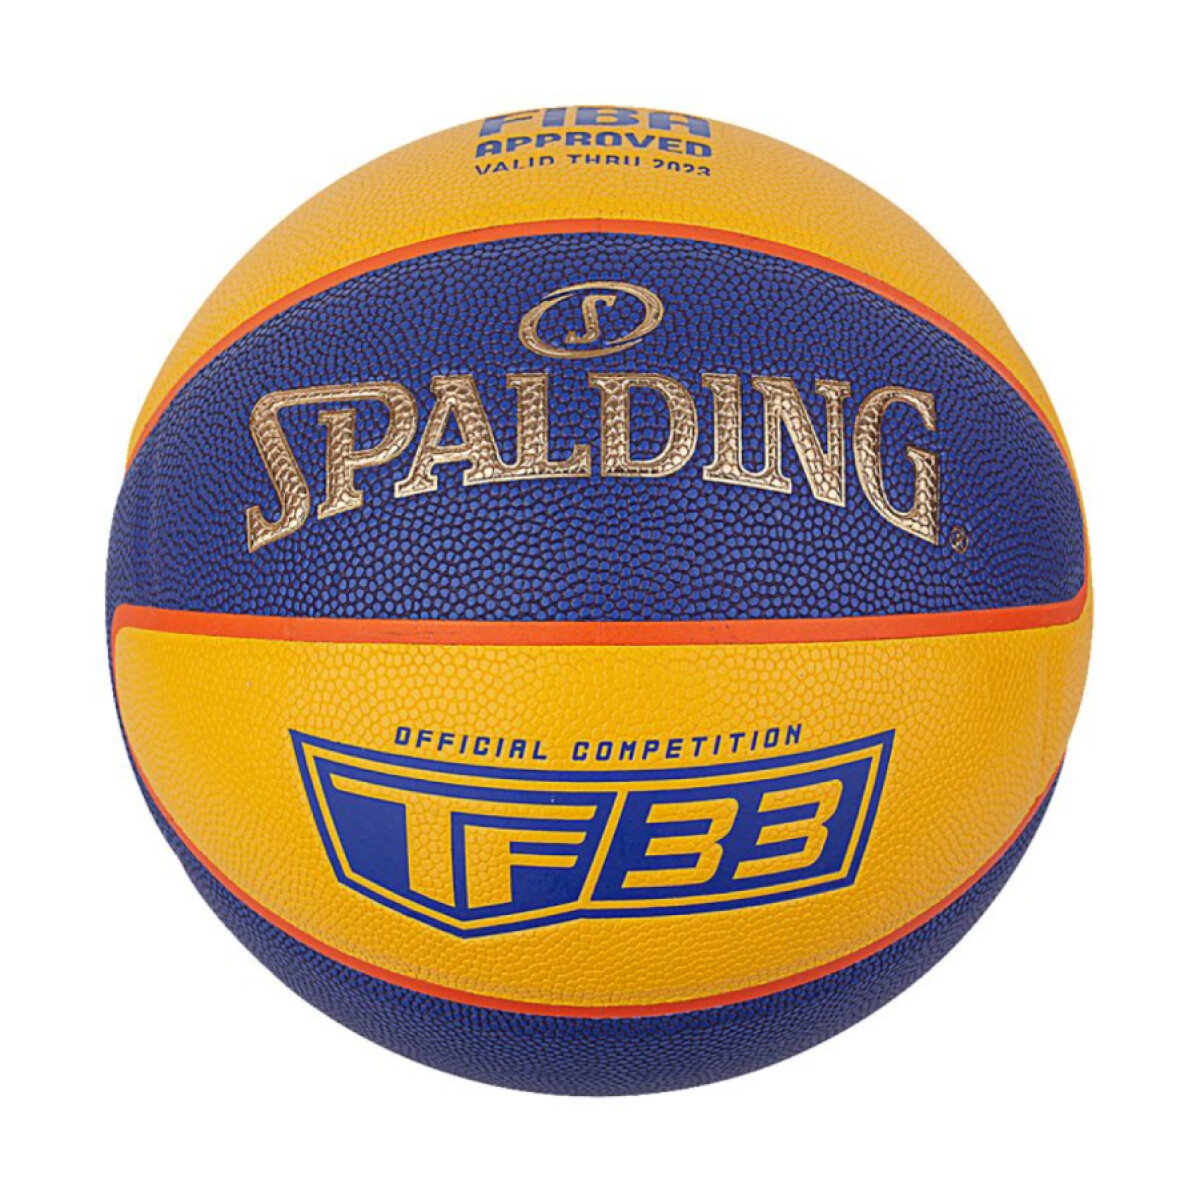 Pelota Basket Spalding Profesional - TF33 Oficial Cuero Nº6 